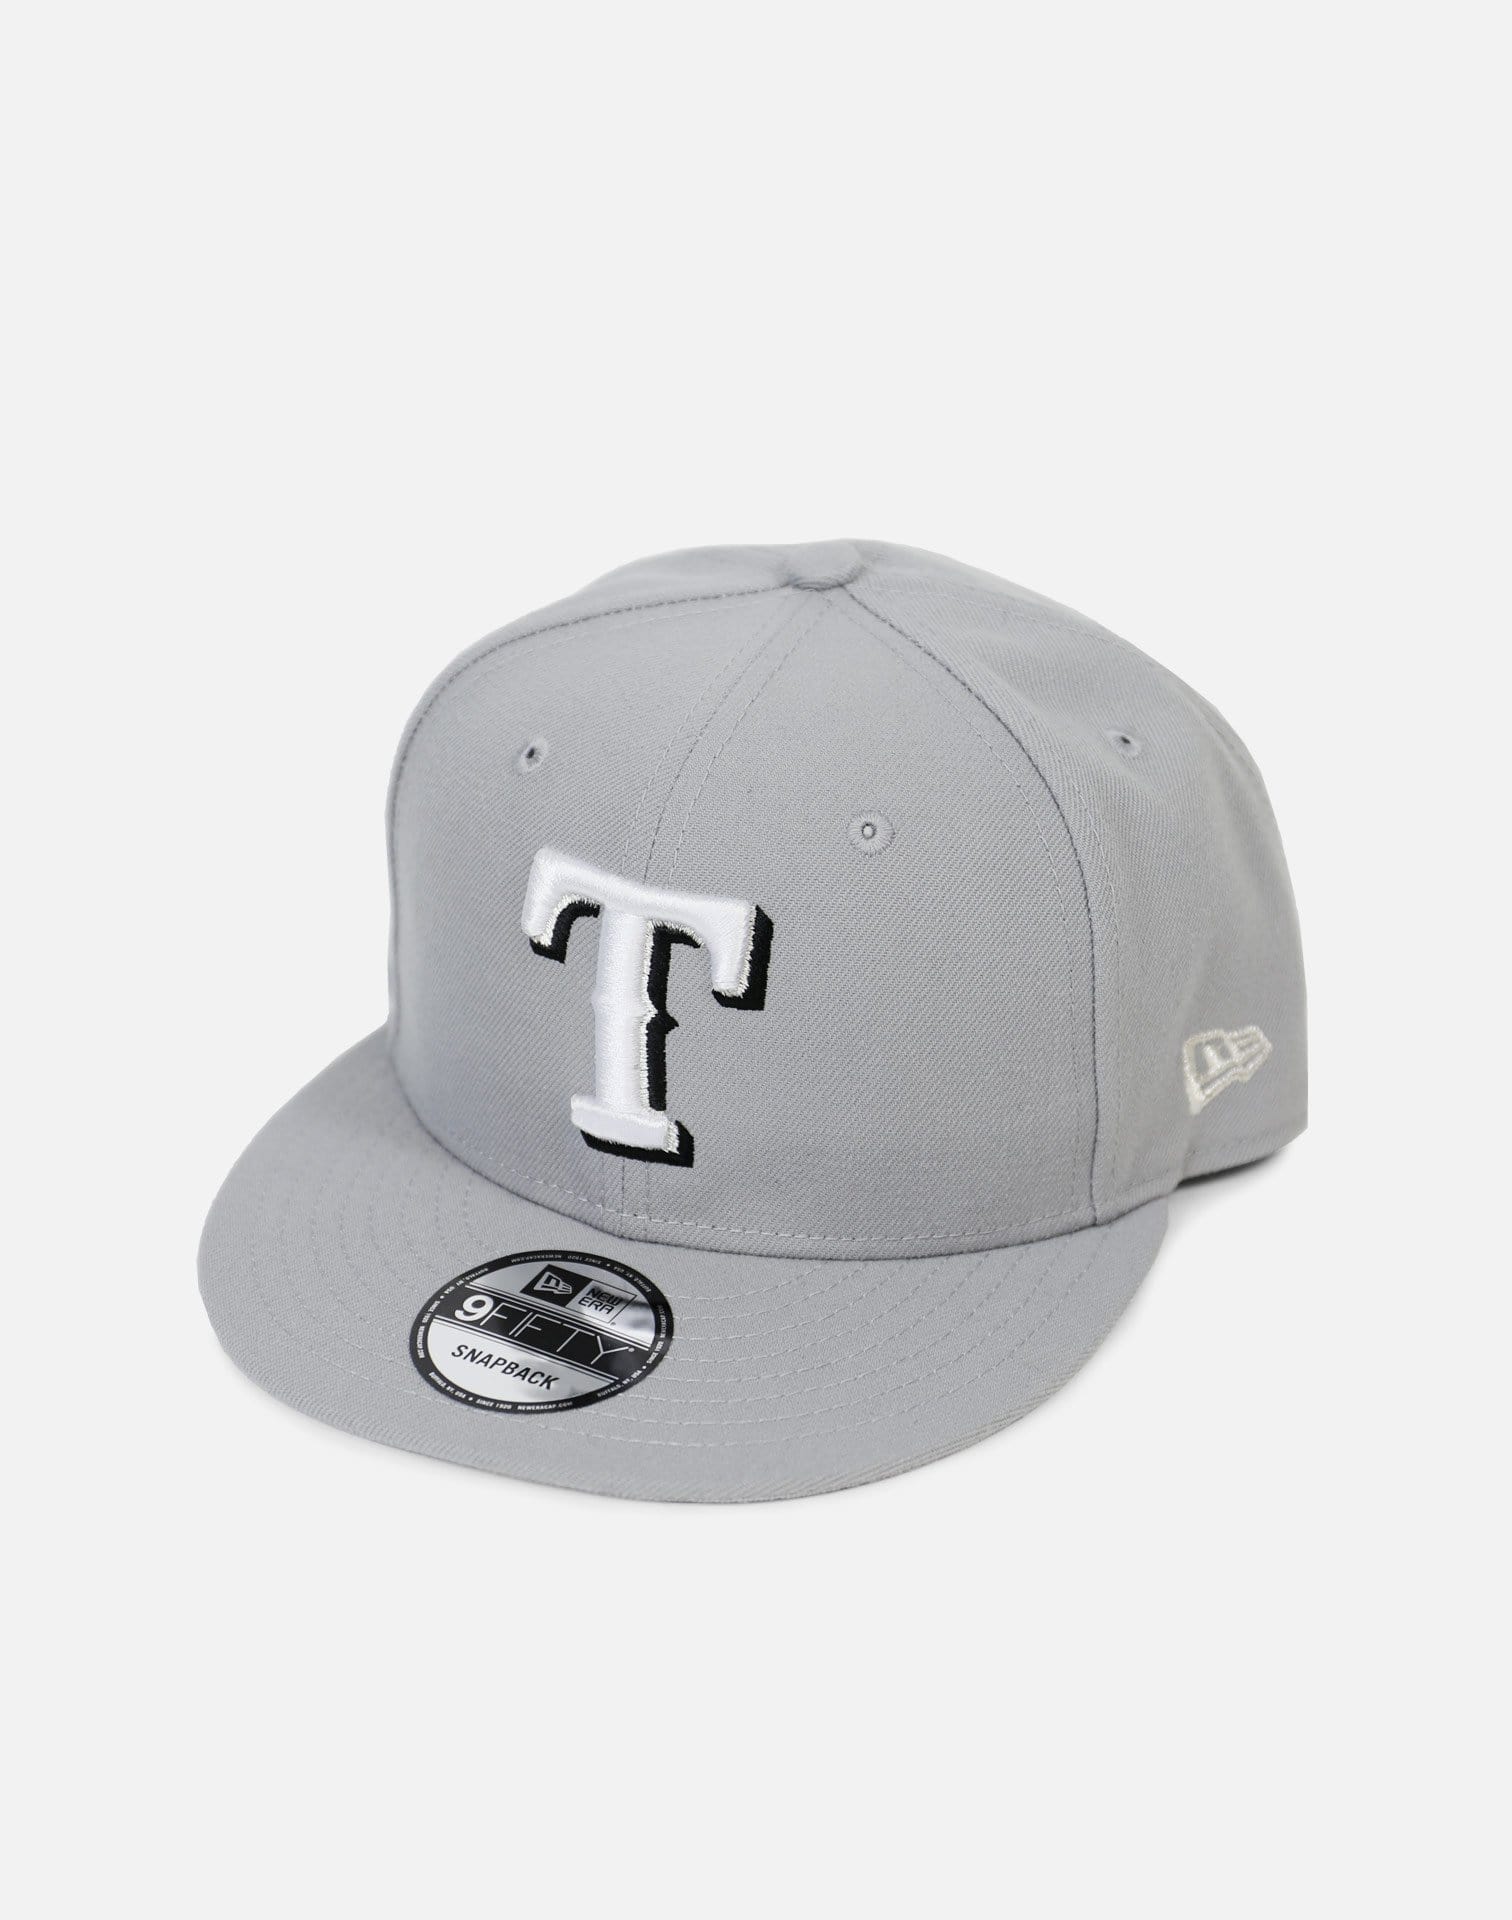 Lids Texas Rangers Majestic Smoke Dye Snapback Hat - Gray